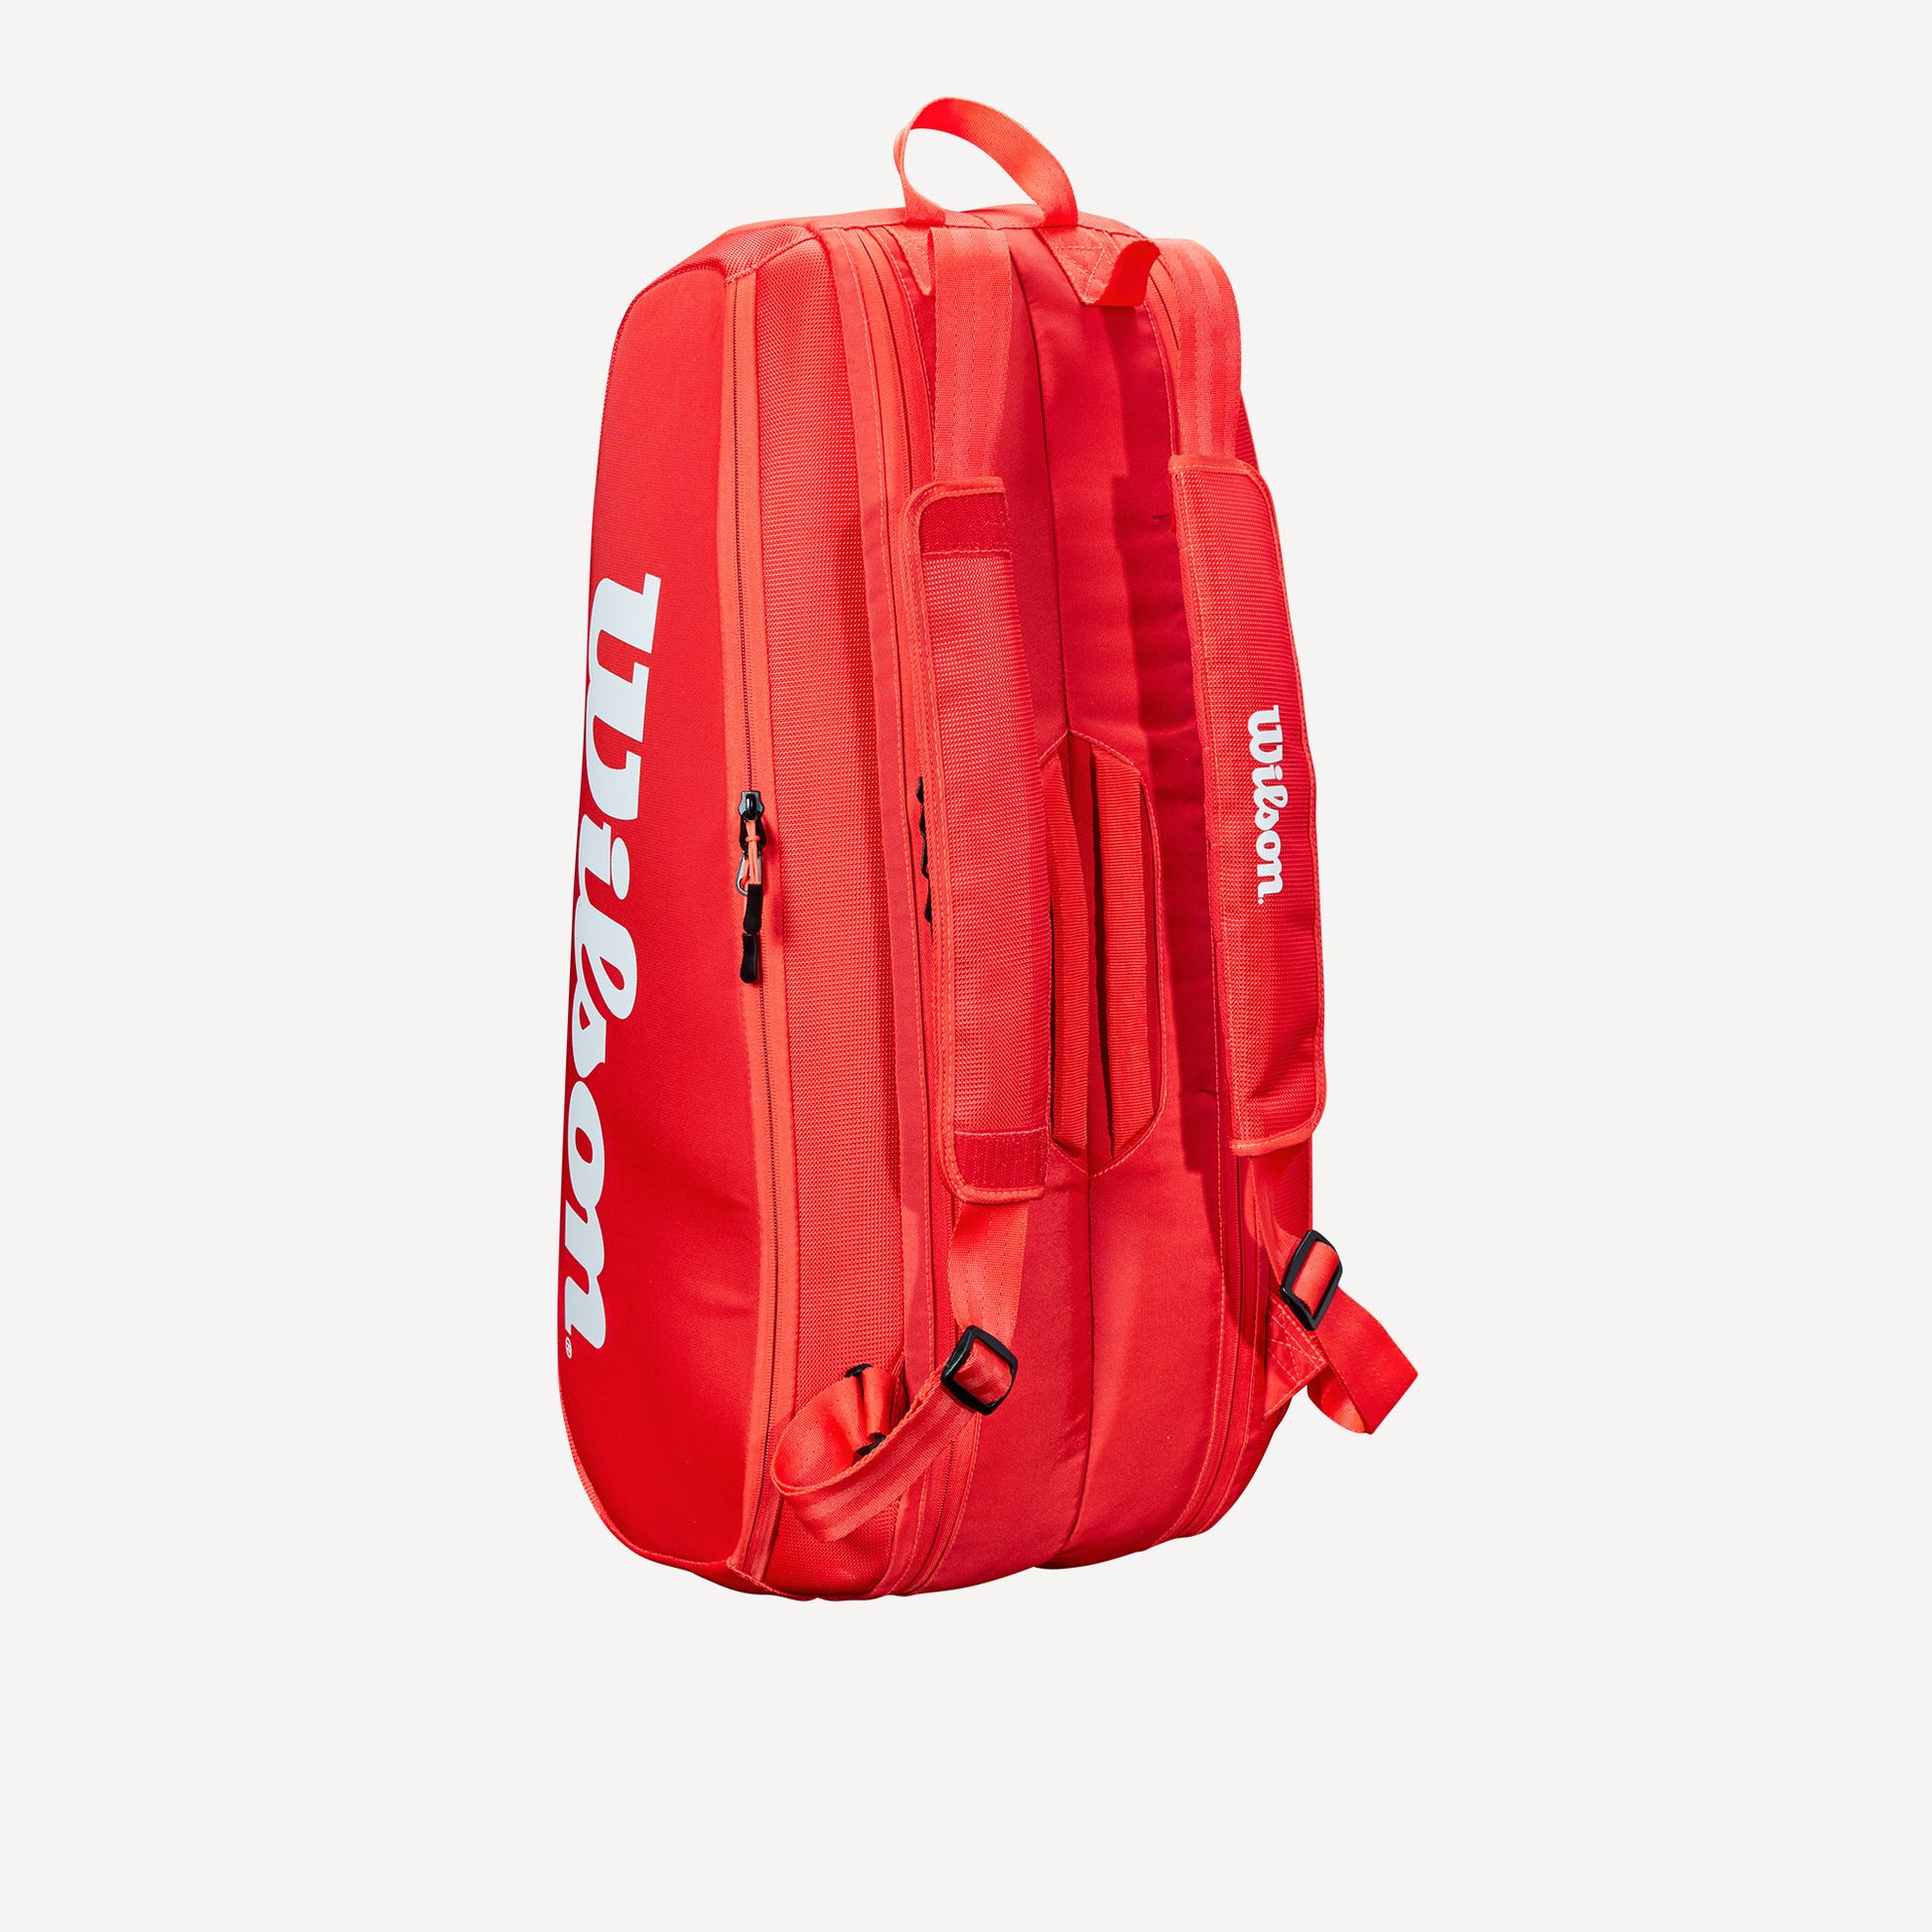 Wilson Super Tour 6 Pack Tennis Bag Red (3)